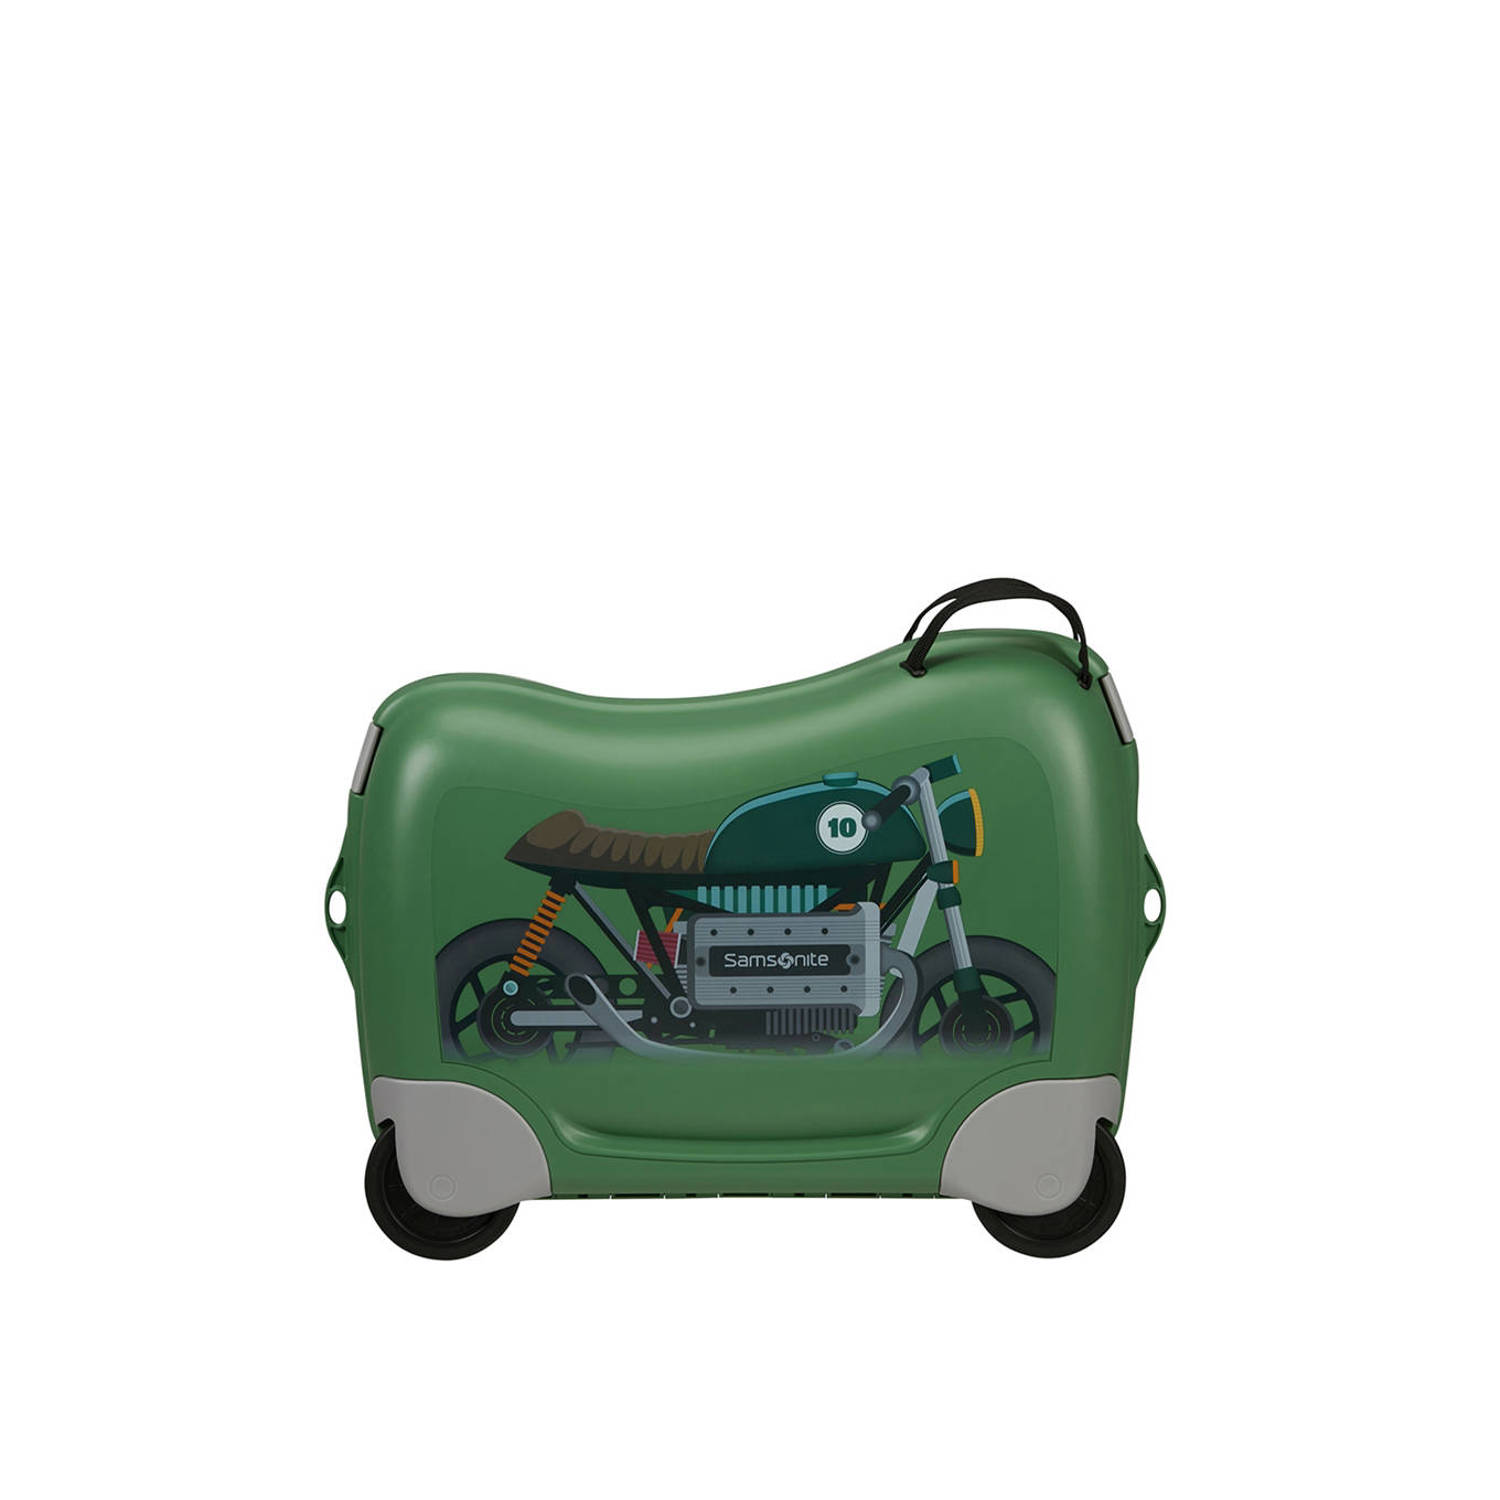 Samsonite trolley Dream2Go Ride-On Motorbike